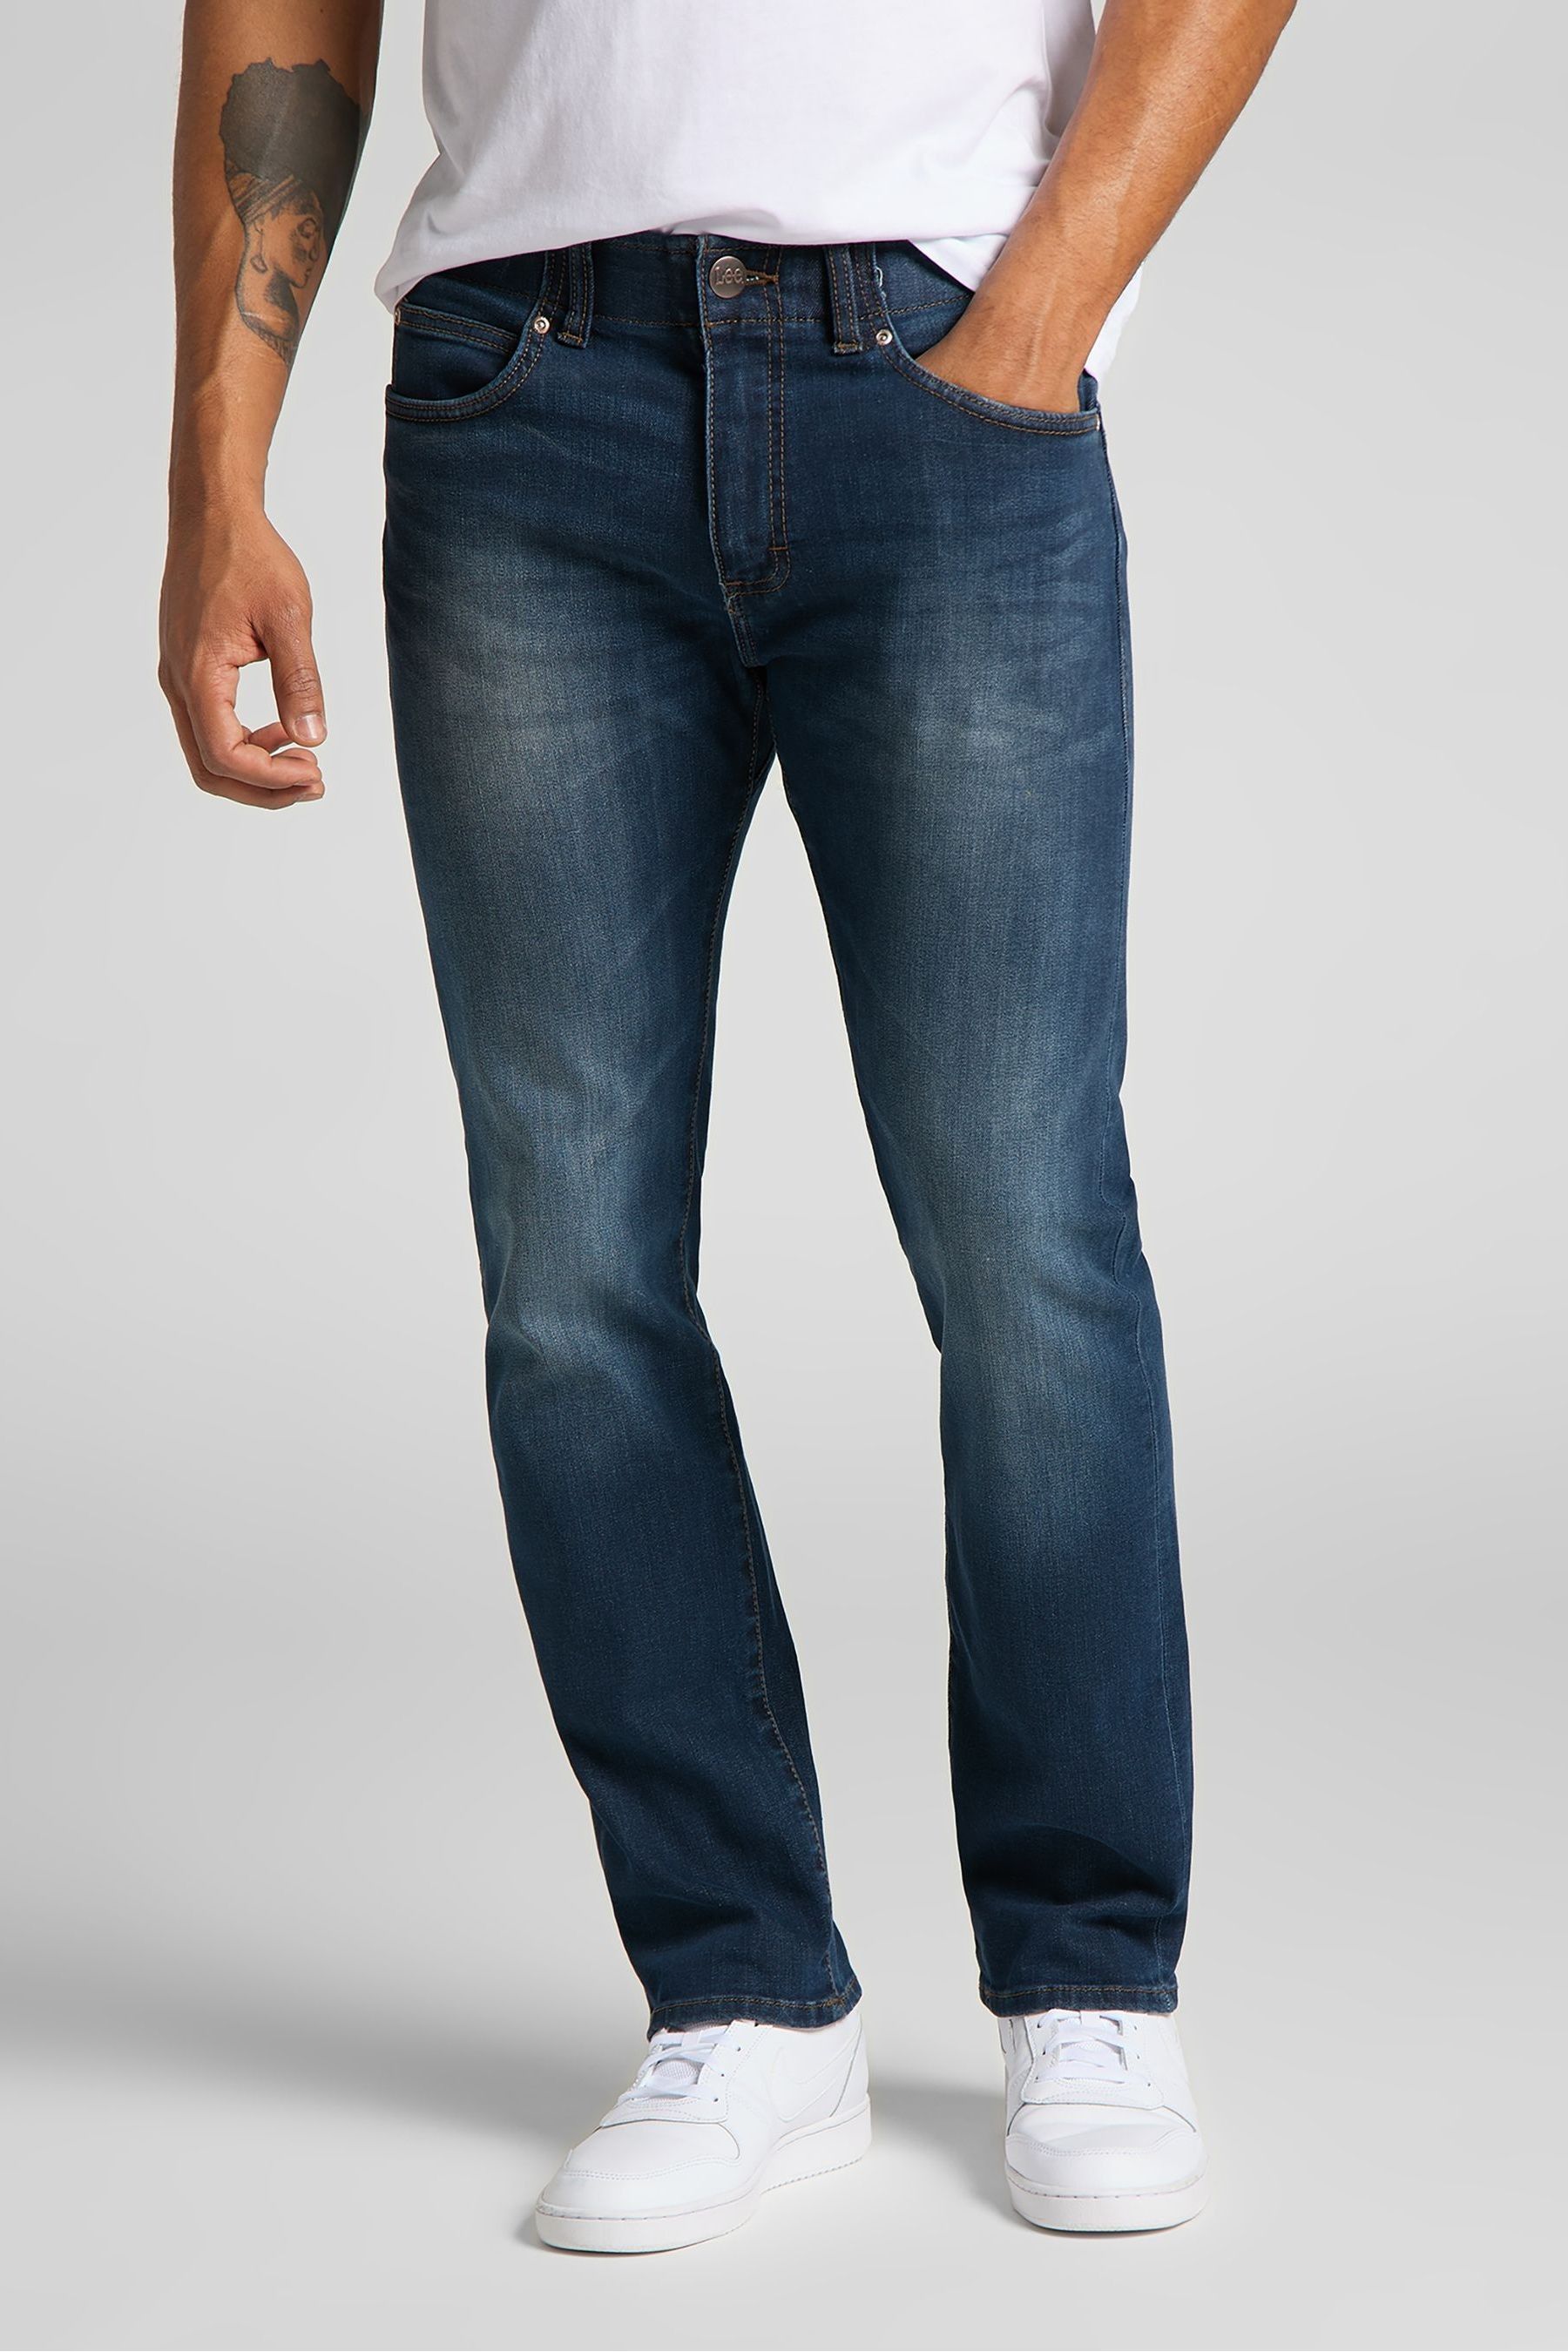 Buy Lee Luke Slim Jeans from the Next UK online shop